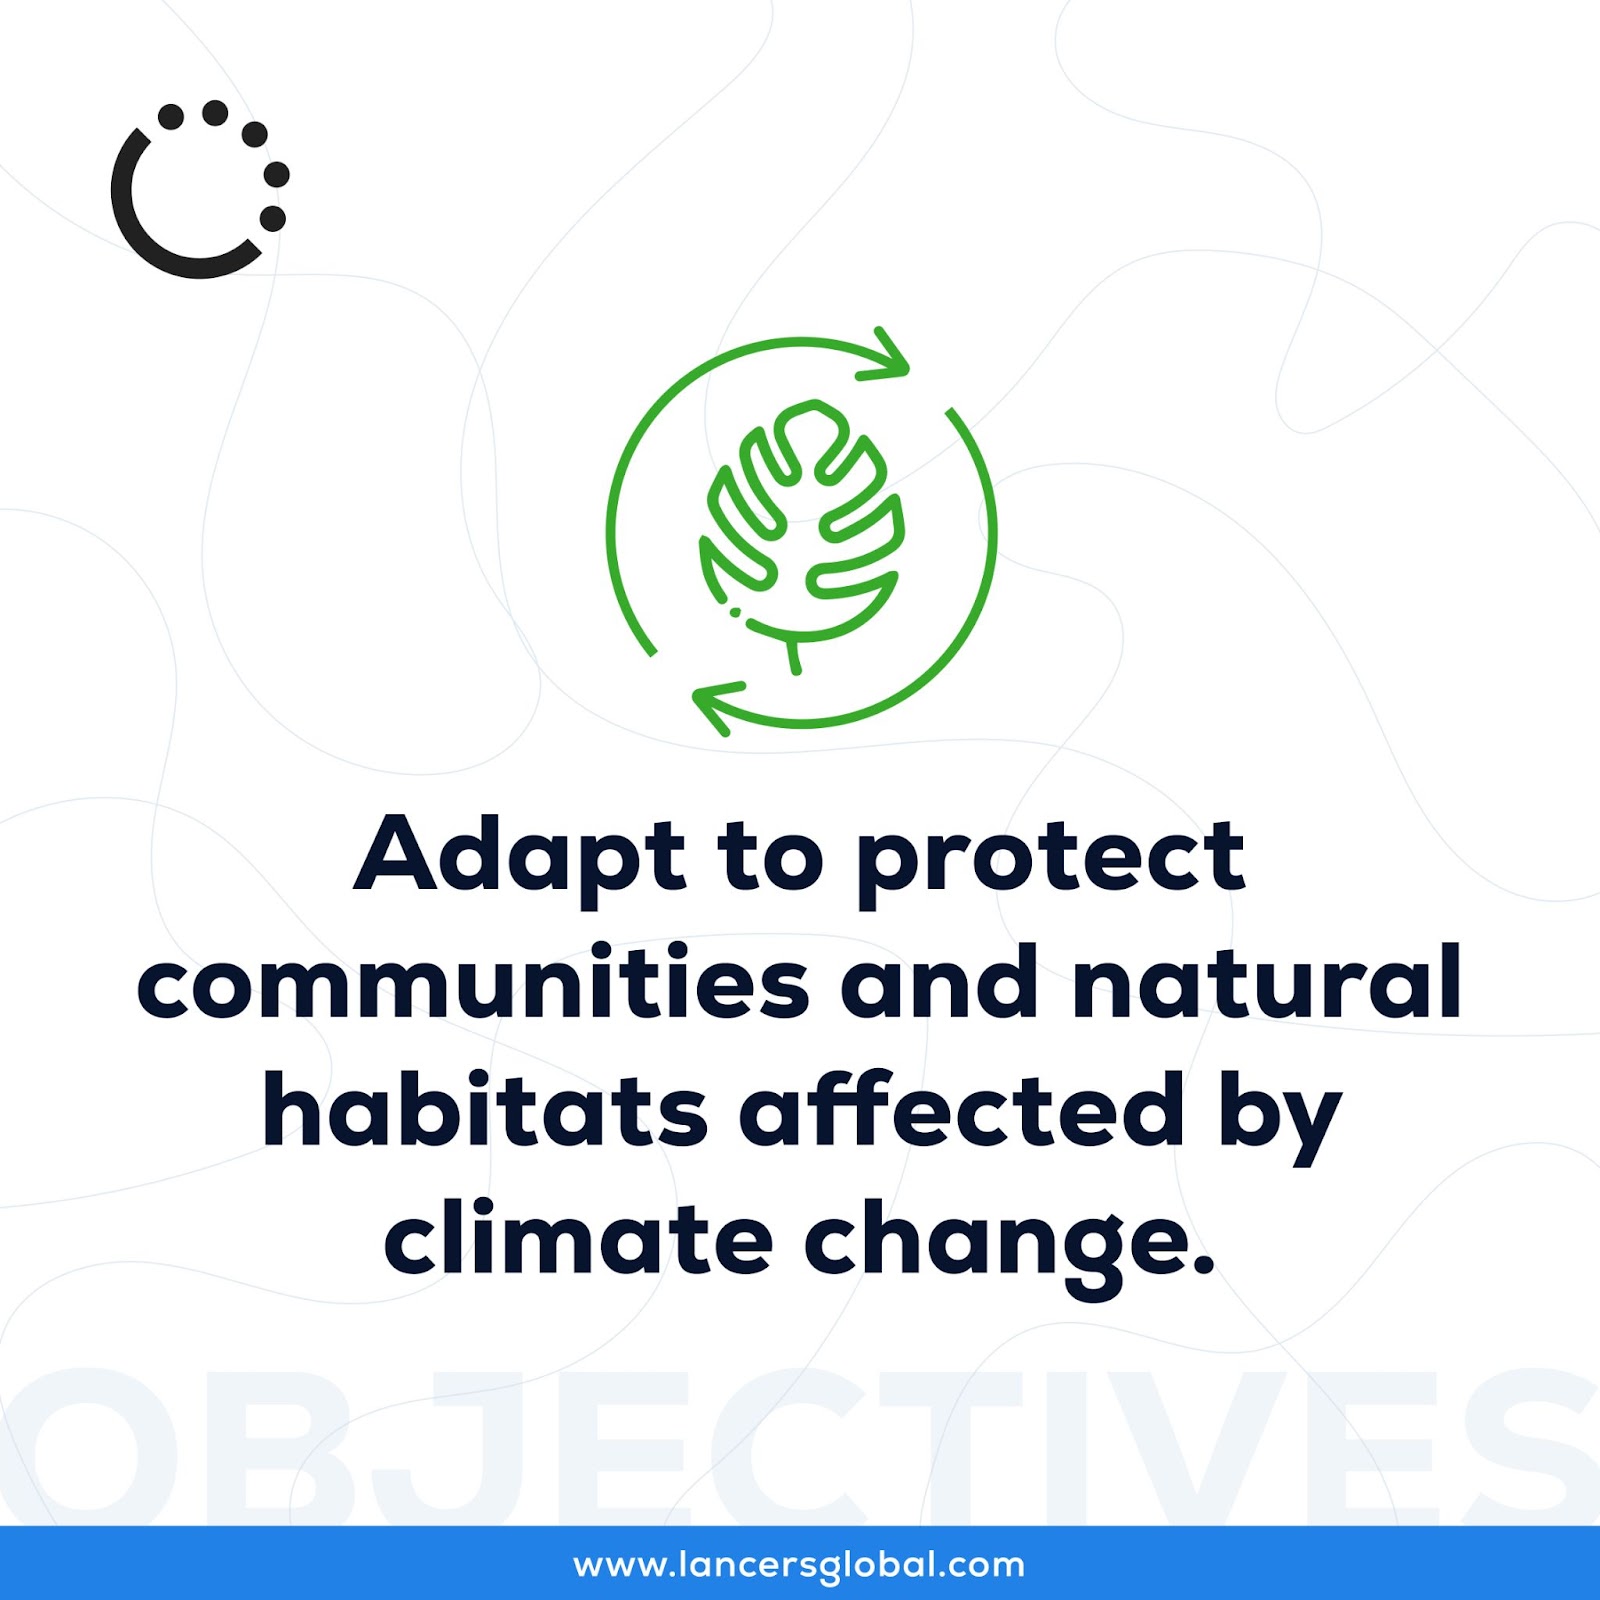 Net-Zero Emissions Goals - Protecting communities and natural habitats